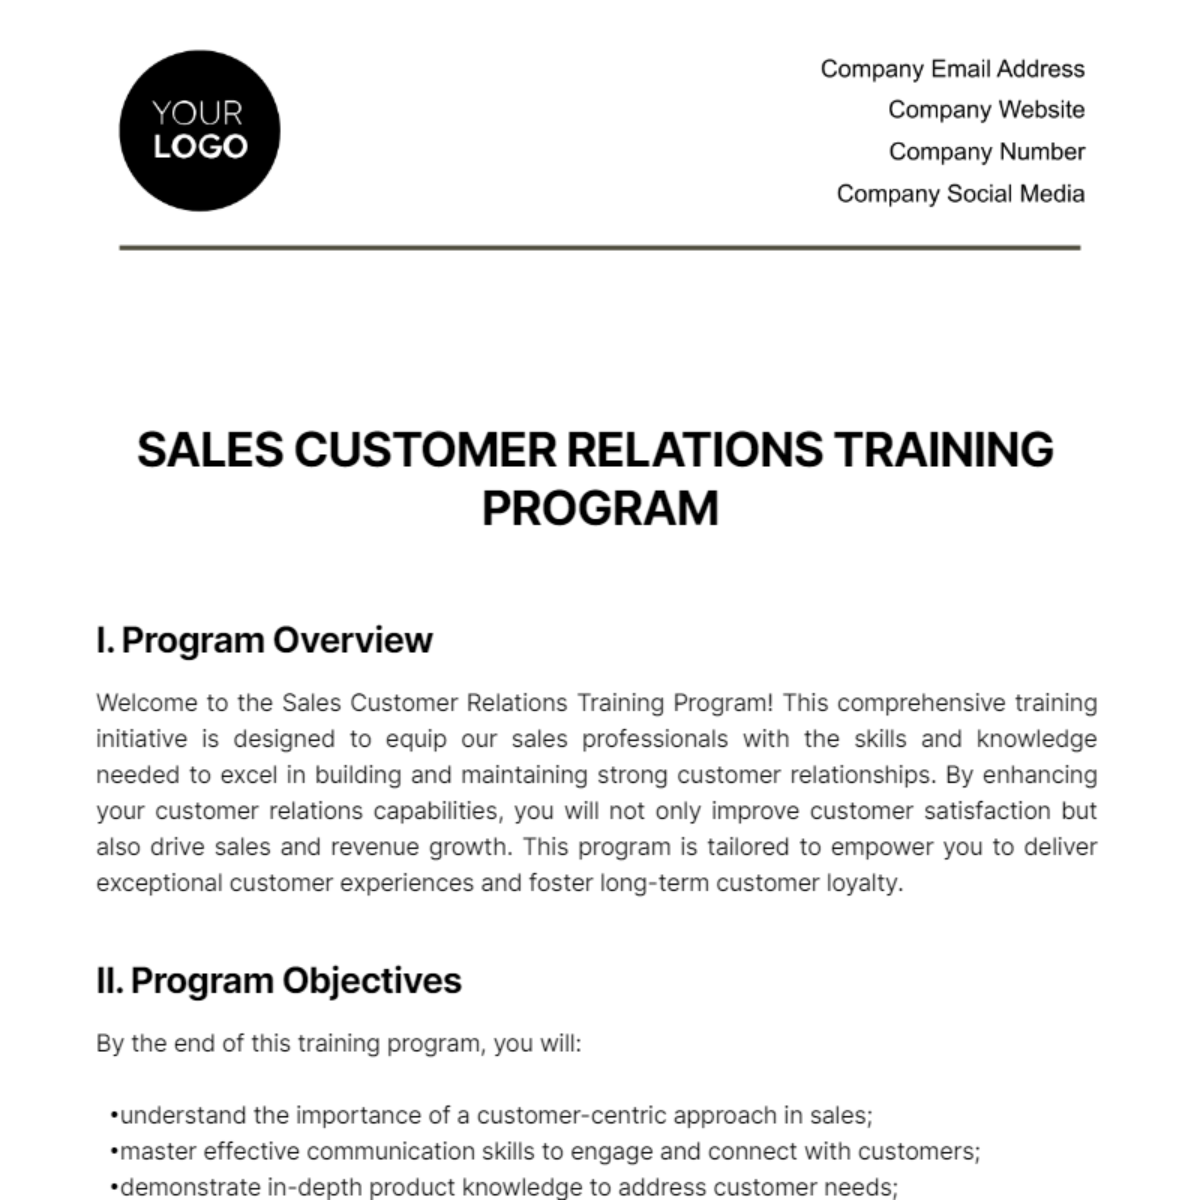 Sales Customer Relations Training Program Template